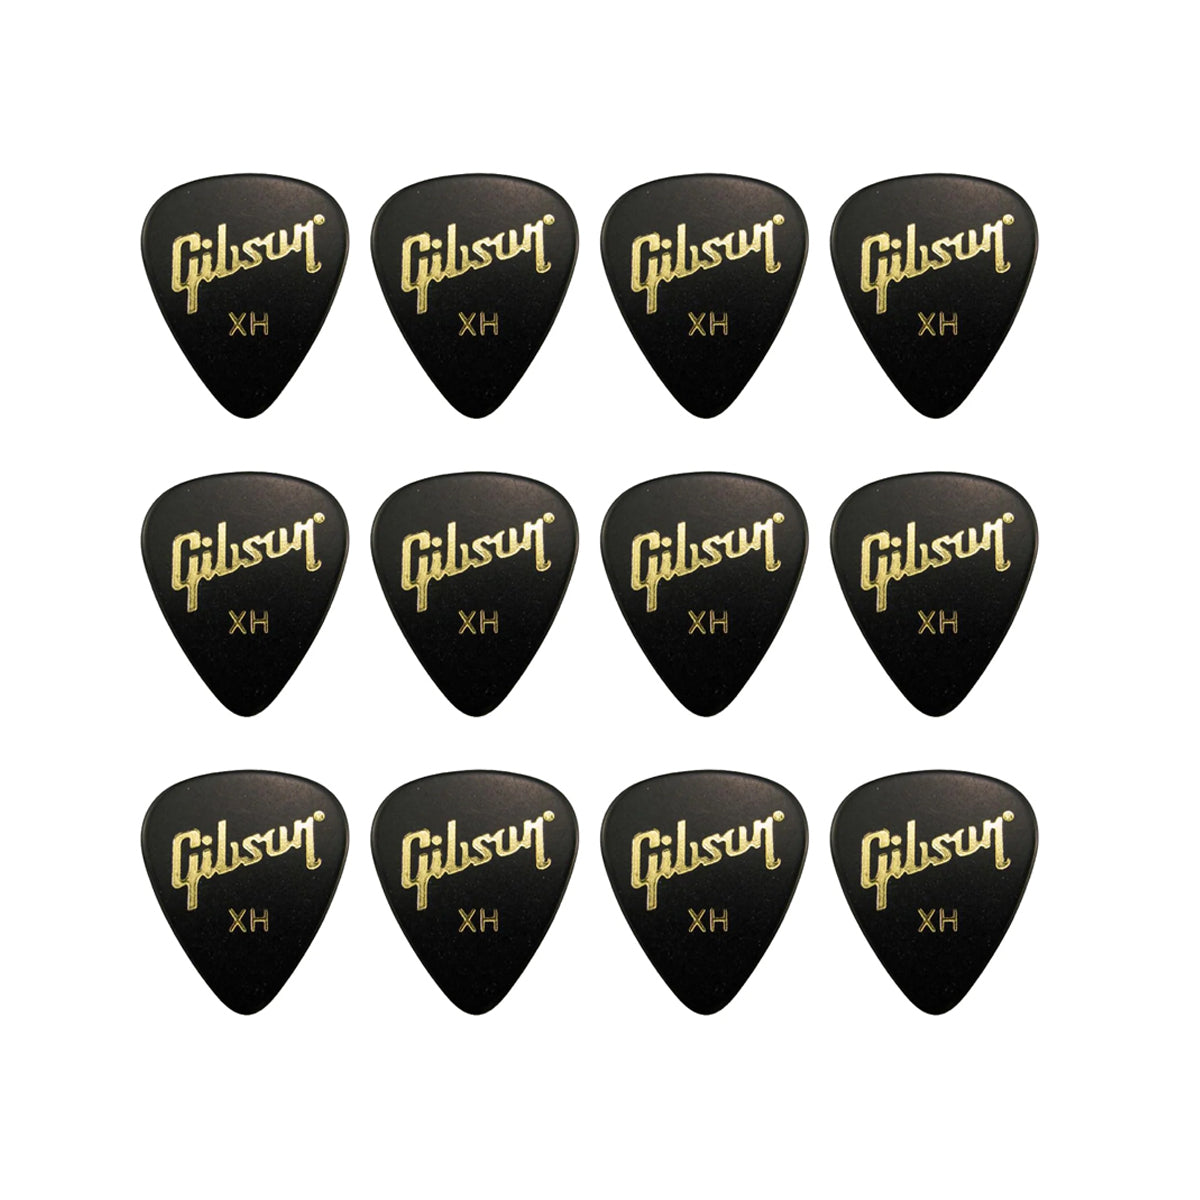 Gibson Gear APRGG-74XH Heavy Wedge Style Black Guitar Pick 12pcs